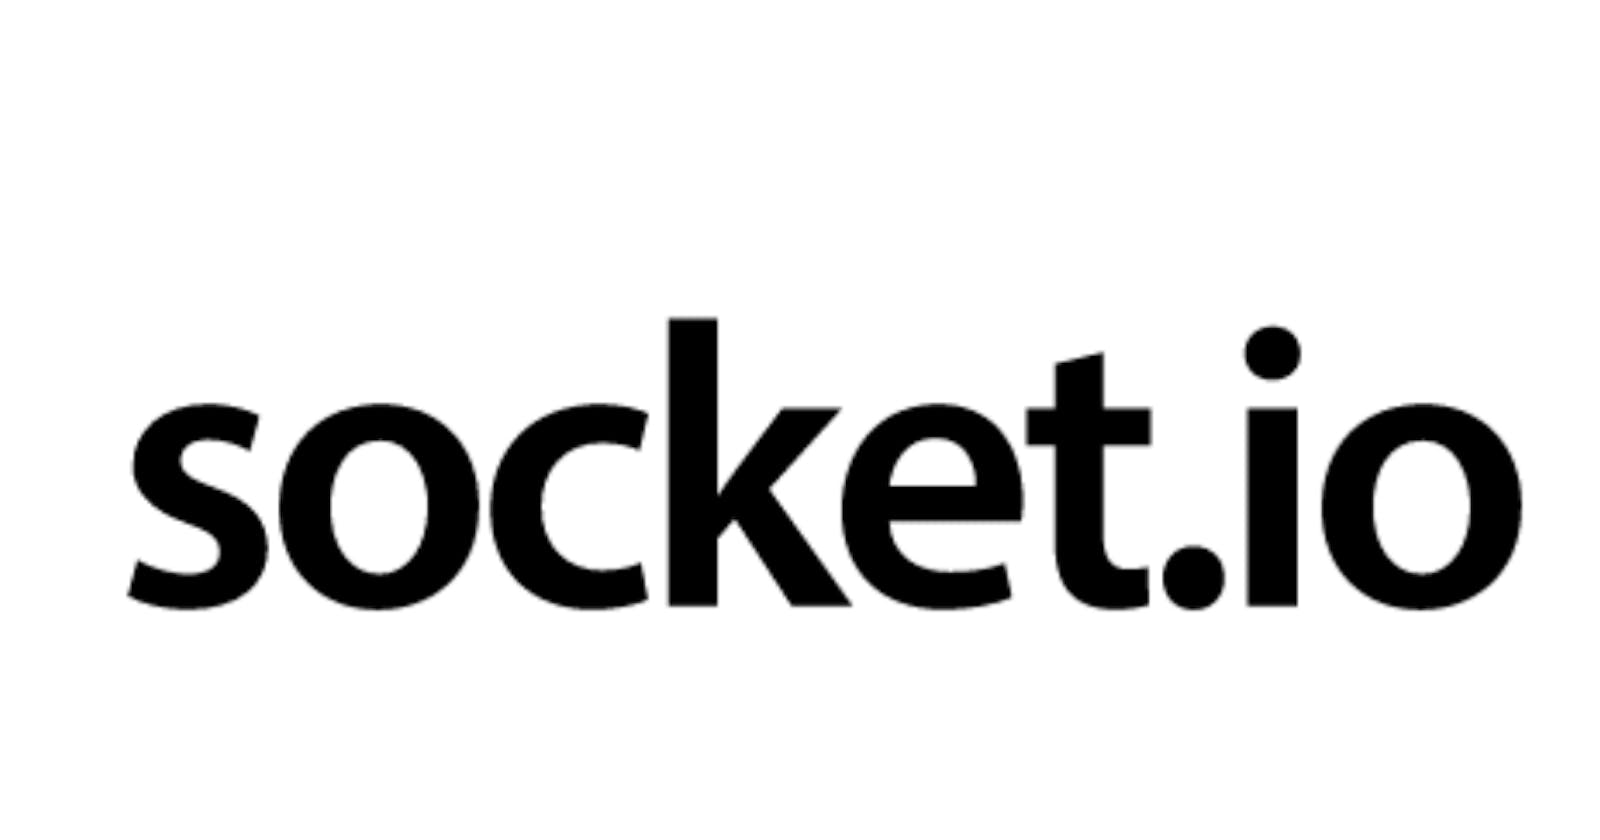 Introduction To Socket.io Using Node Js